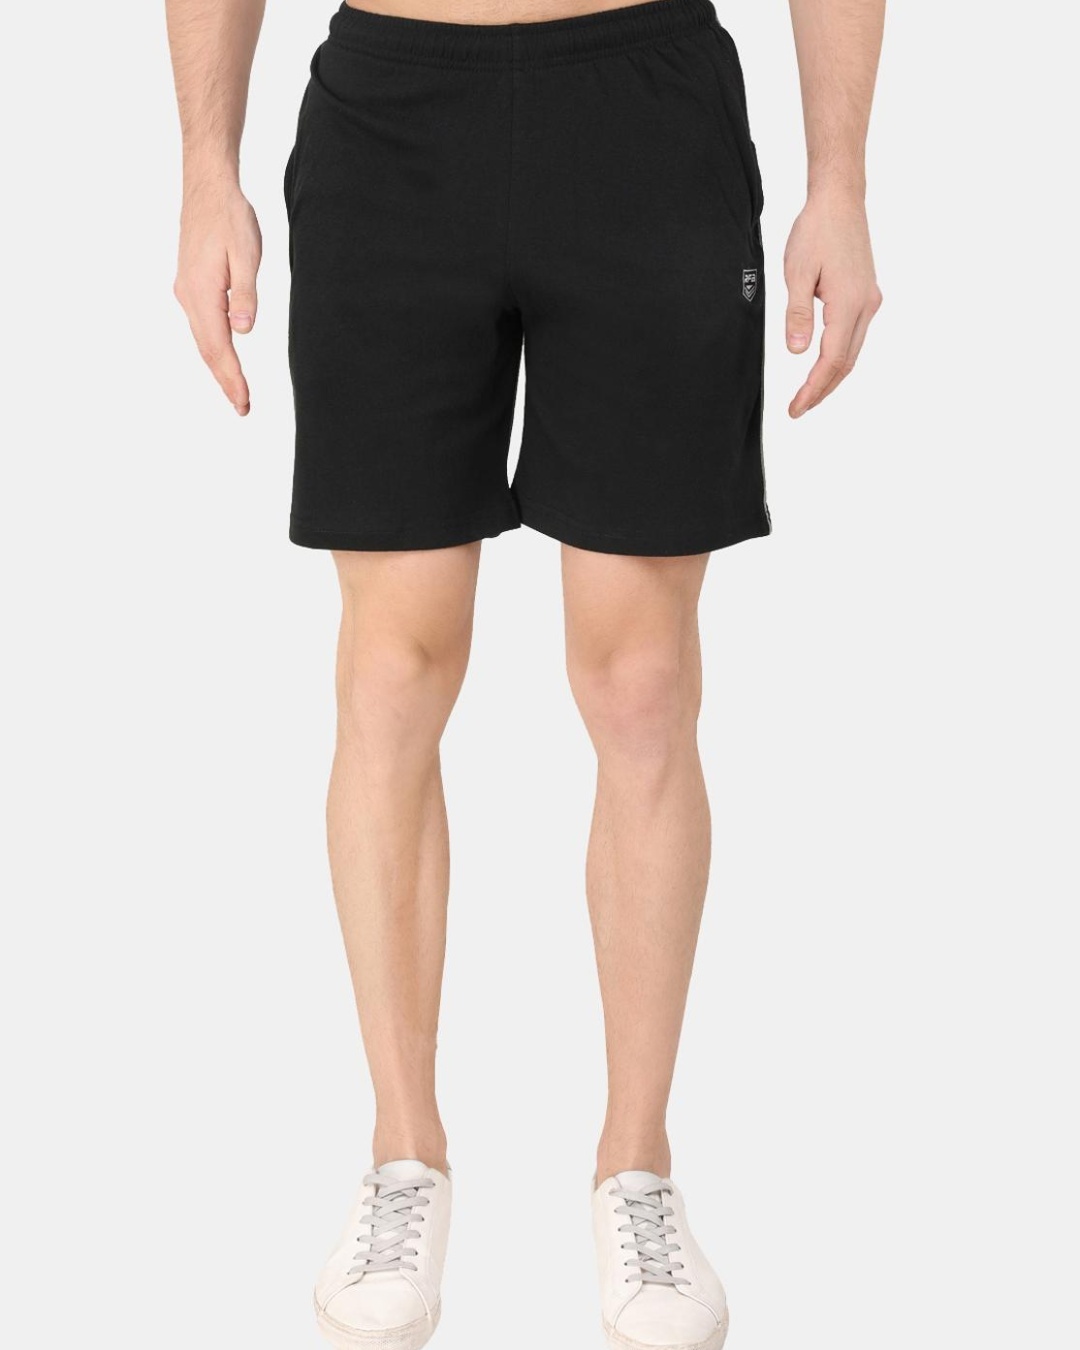 Buy Men's Black Shorts for Men Black Online at Bewakoof